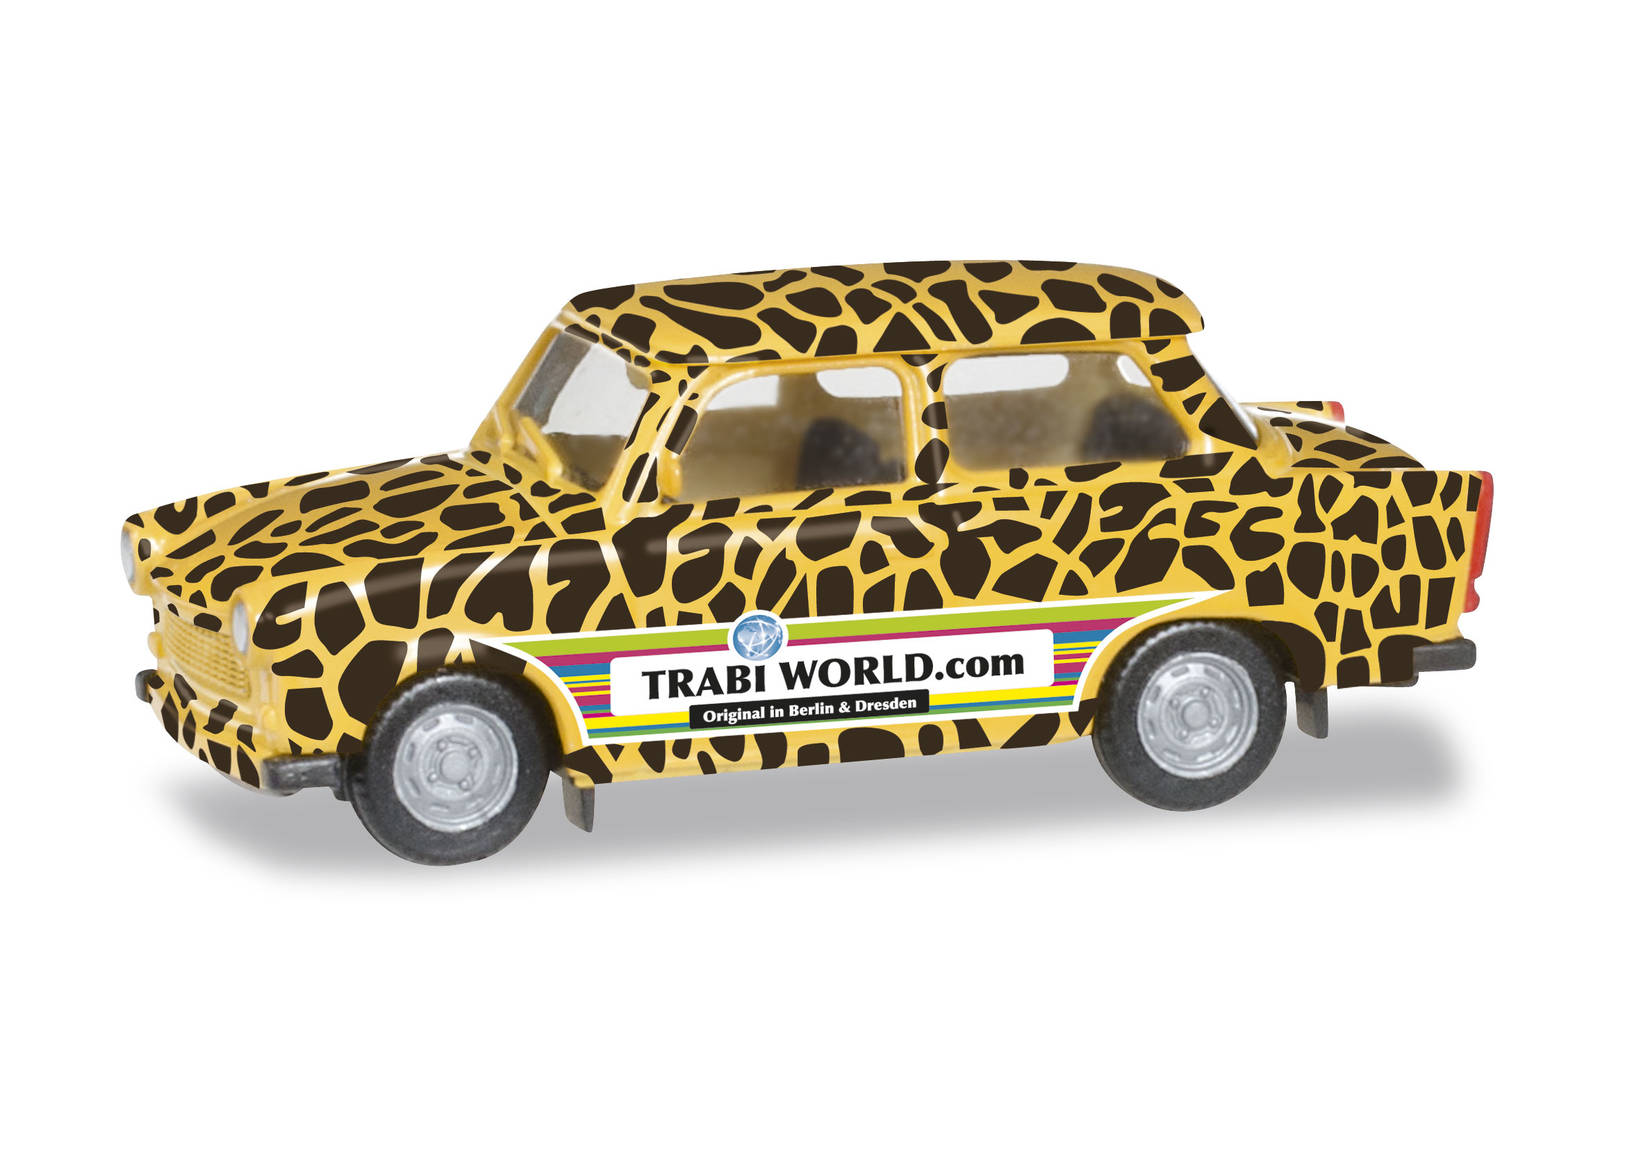 Trabant 601 "Edition Trabi-world.com" Modell 3 (Giraffe)